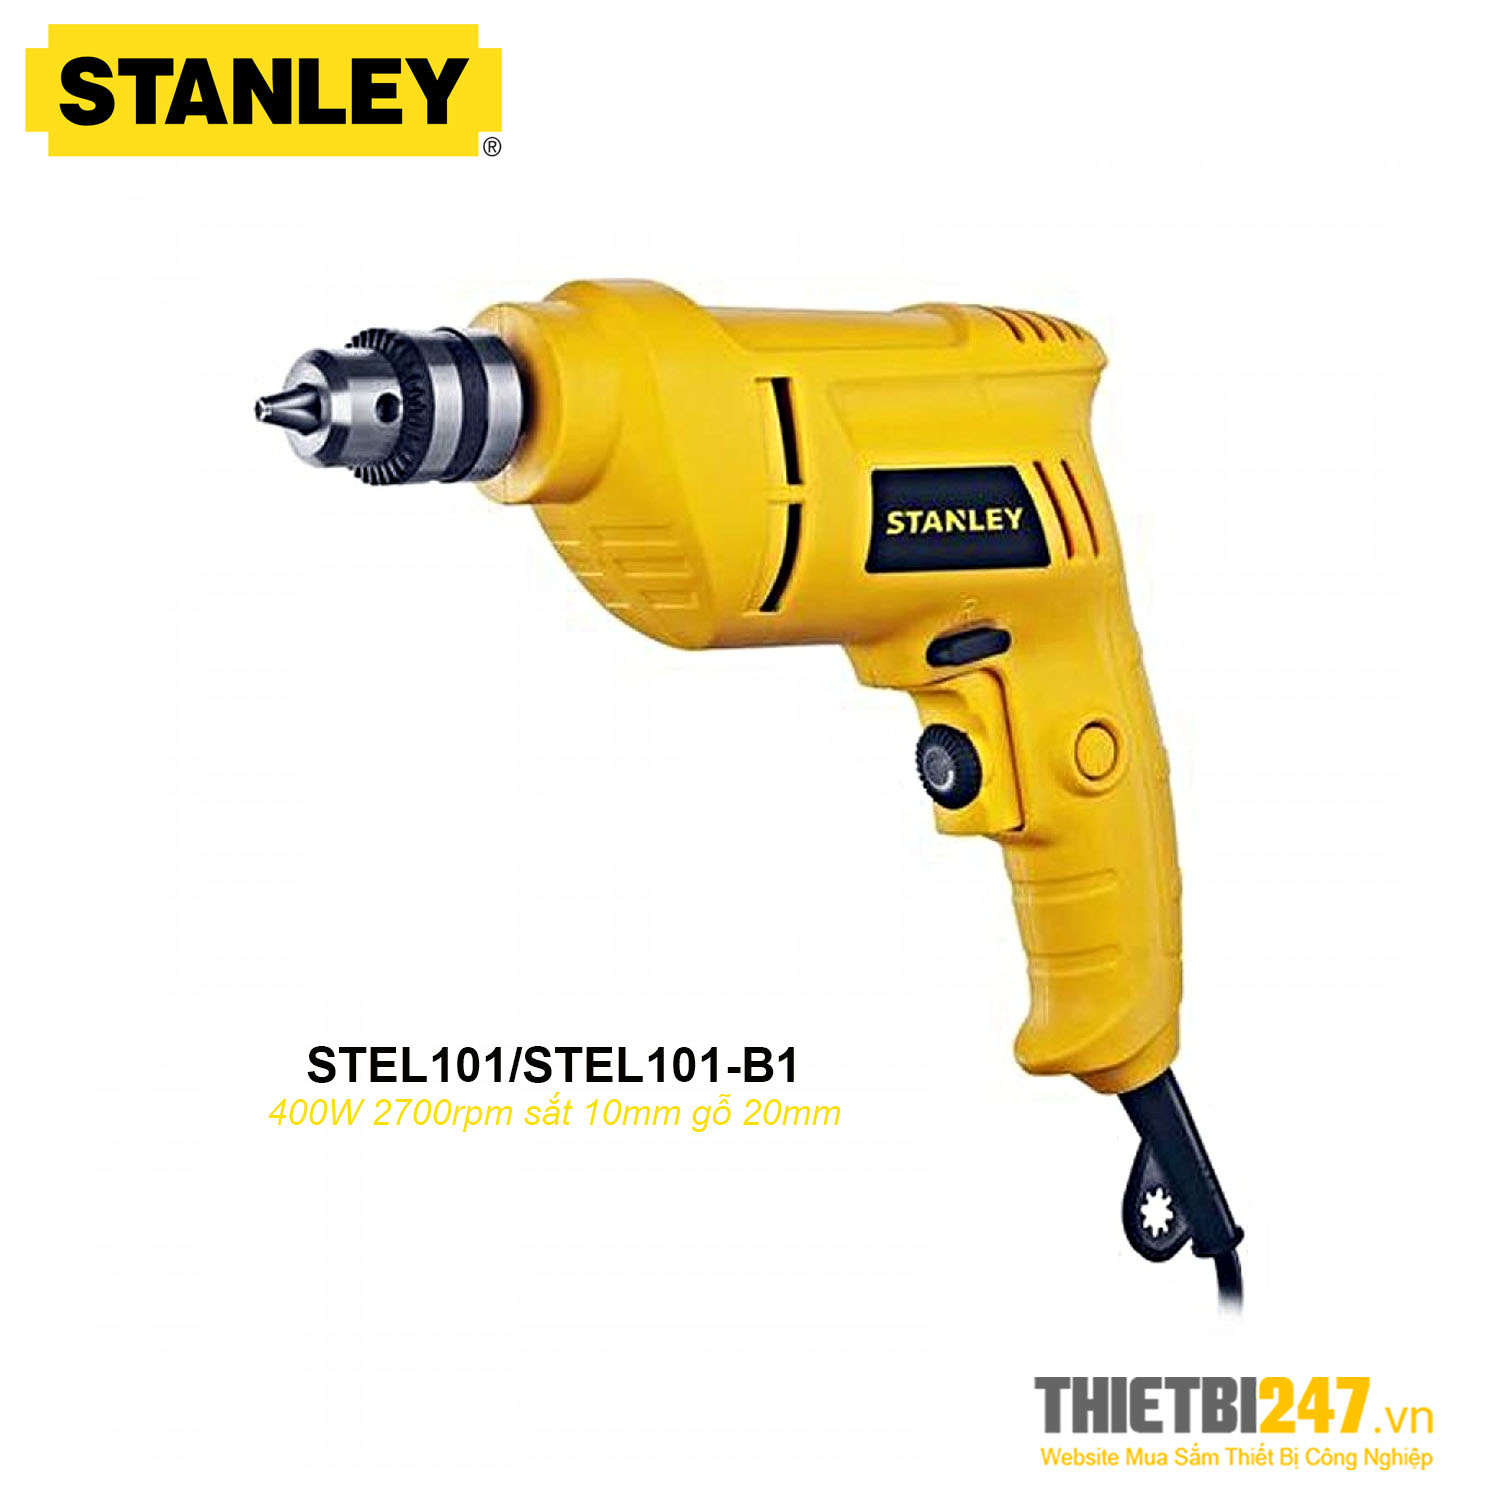 Máy khoan cầm tay Stanley STEL101 400W 2700rpm sắt 10mm gỗ 20mm